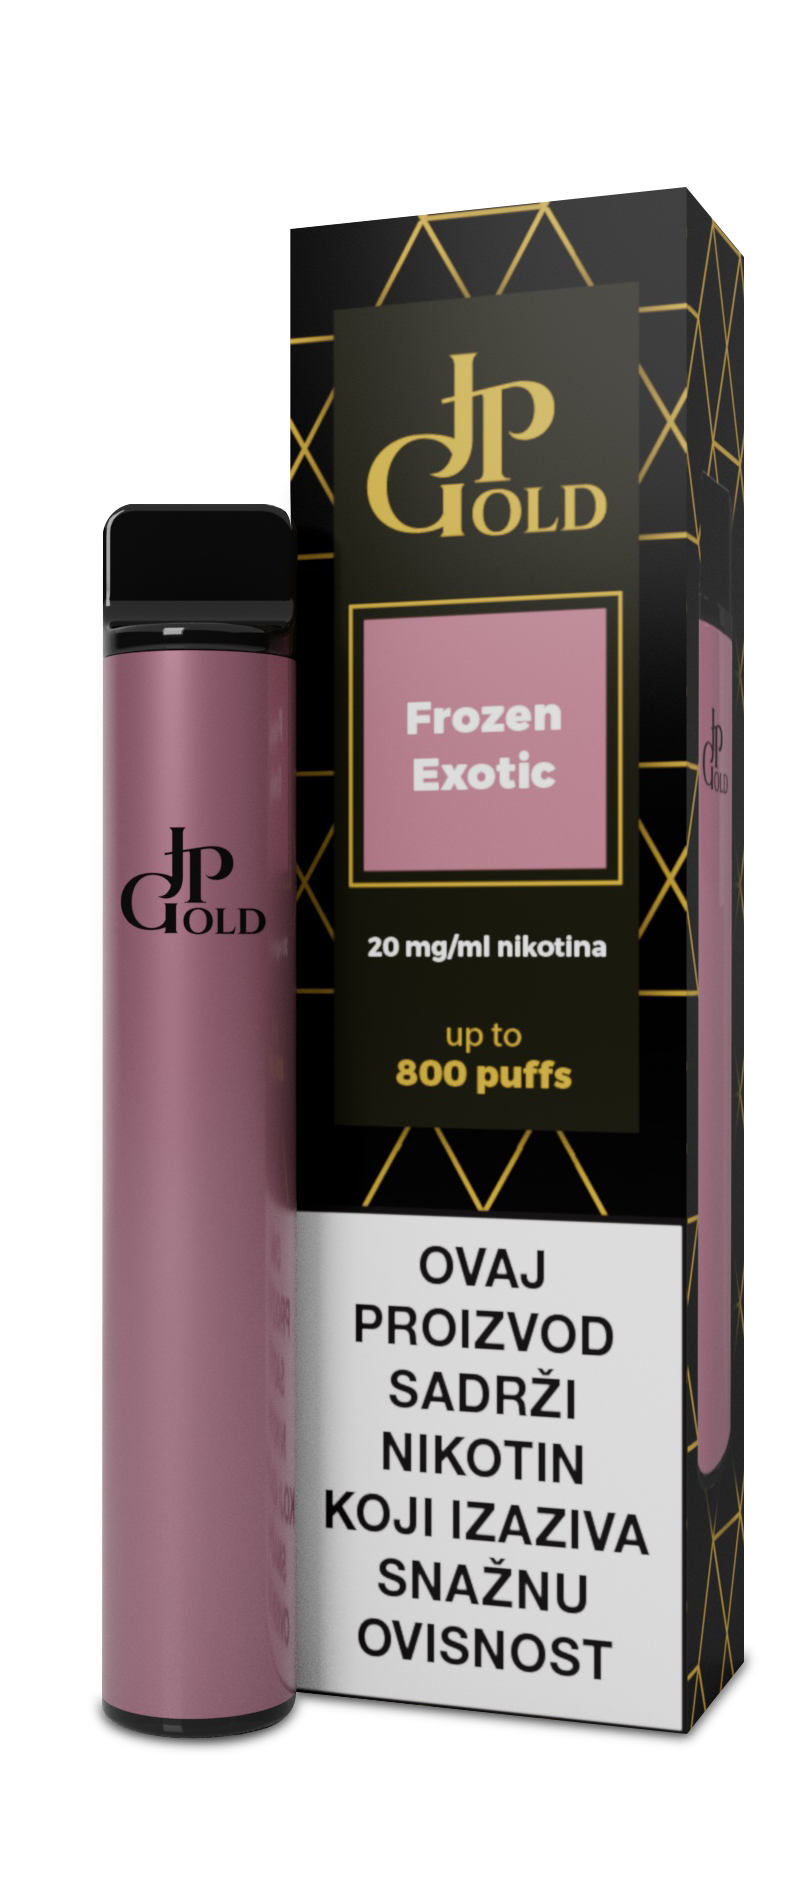 JP GOLD Premium, Frozen Exotic, 20mg nicotine